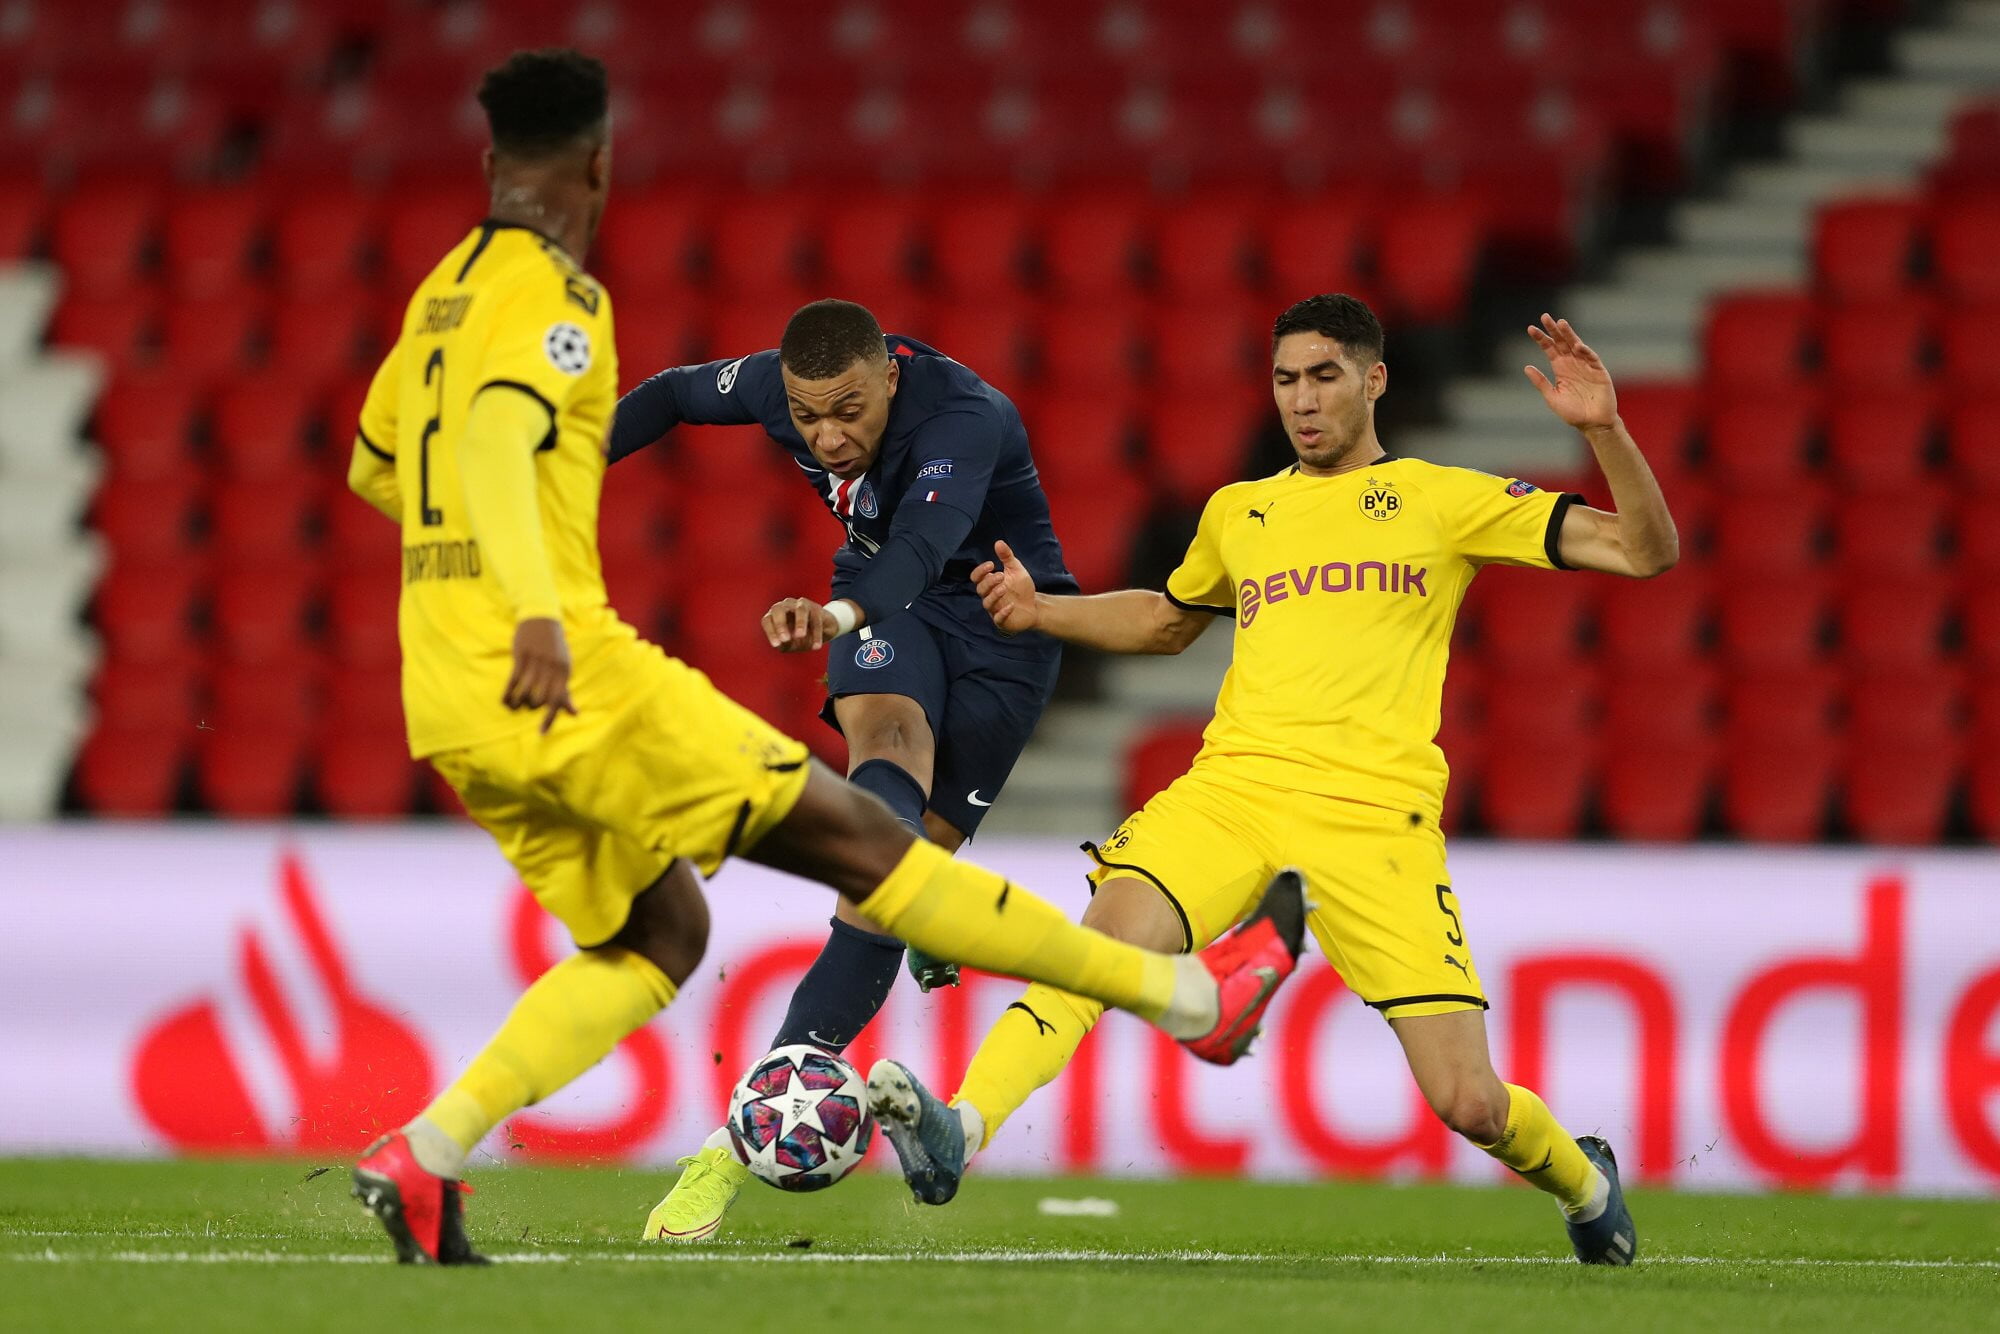 Paris Saint-Germain's Kylian Mbappé battles for the ball against Borussia Dortmund's Achraf Hakimi and Dan-Axel Zagadou